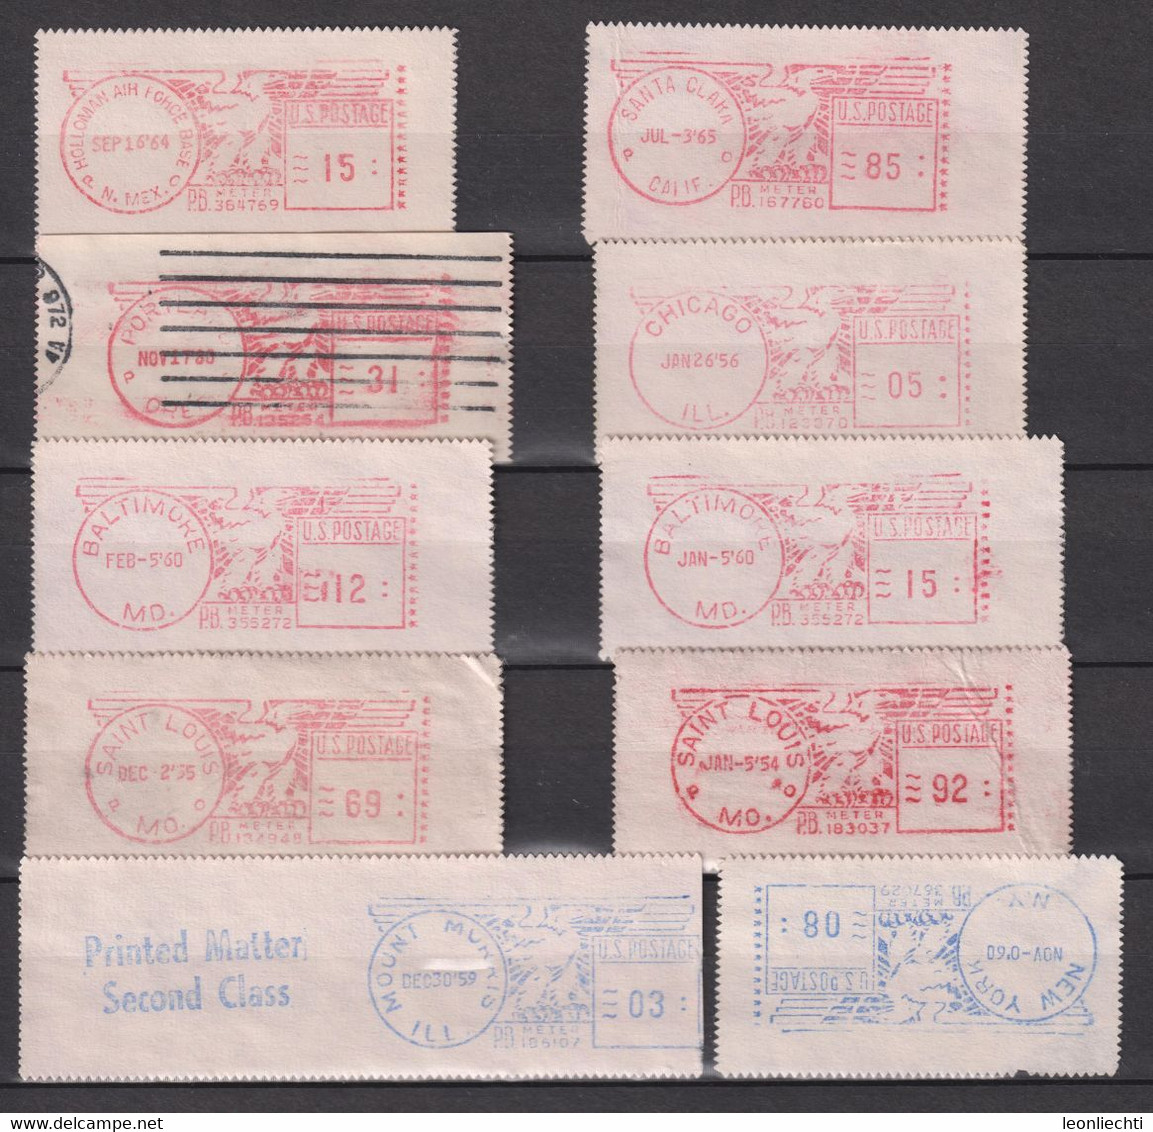 Fragment Meter Stamp 10 Stk. - Viñetas De Franqueo [ATM]